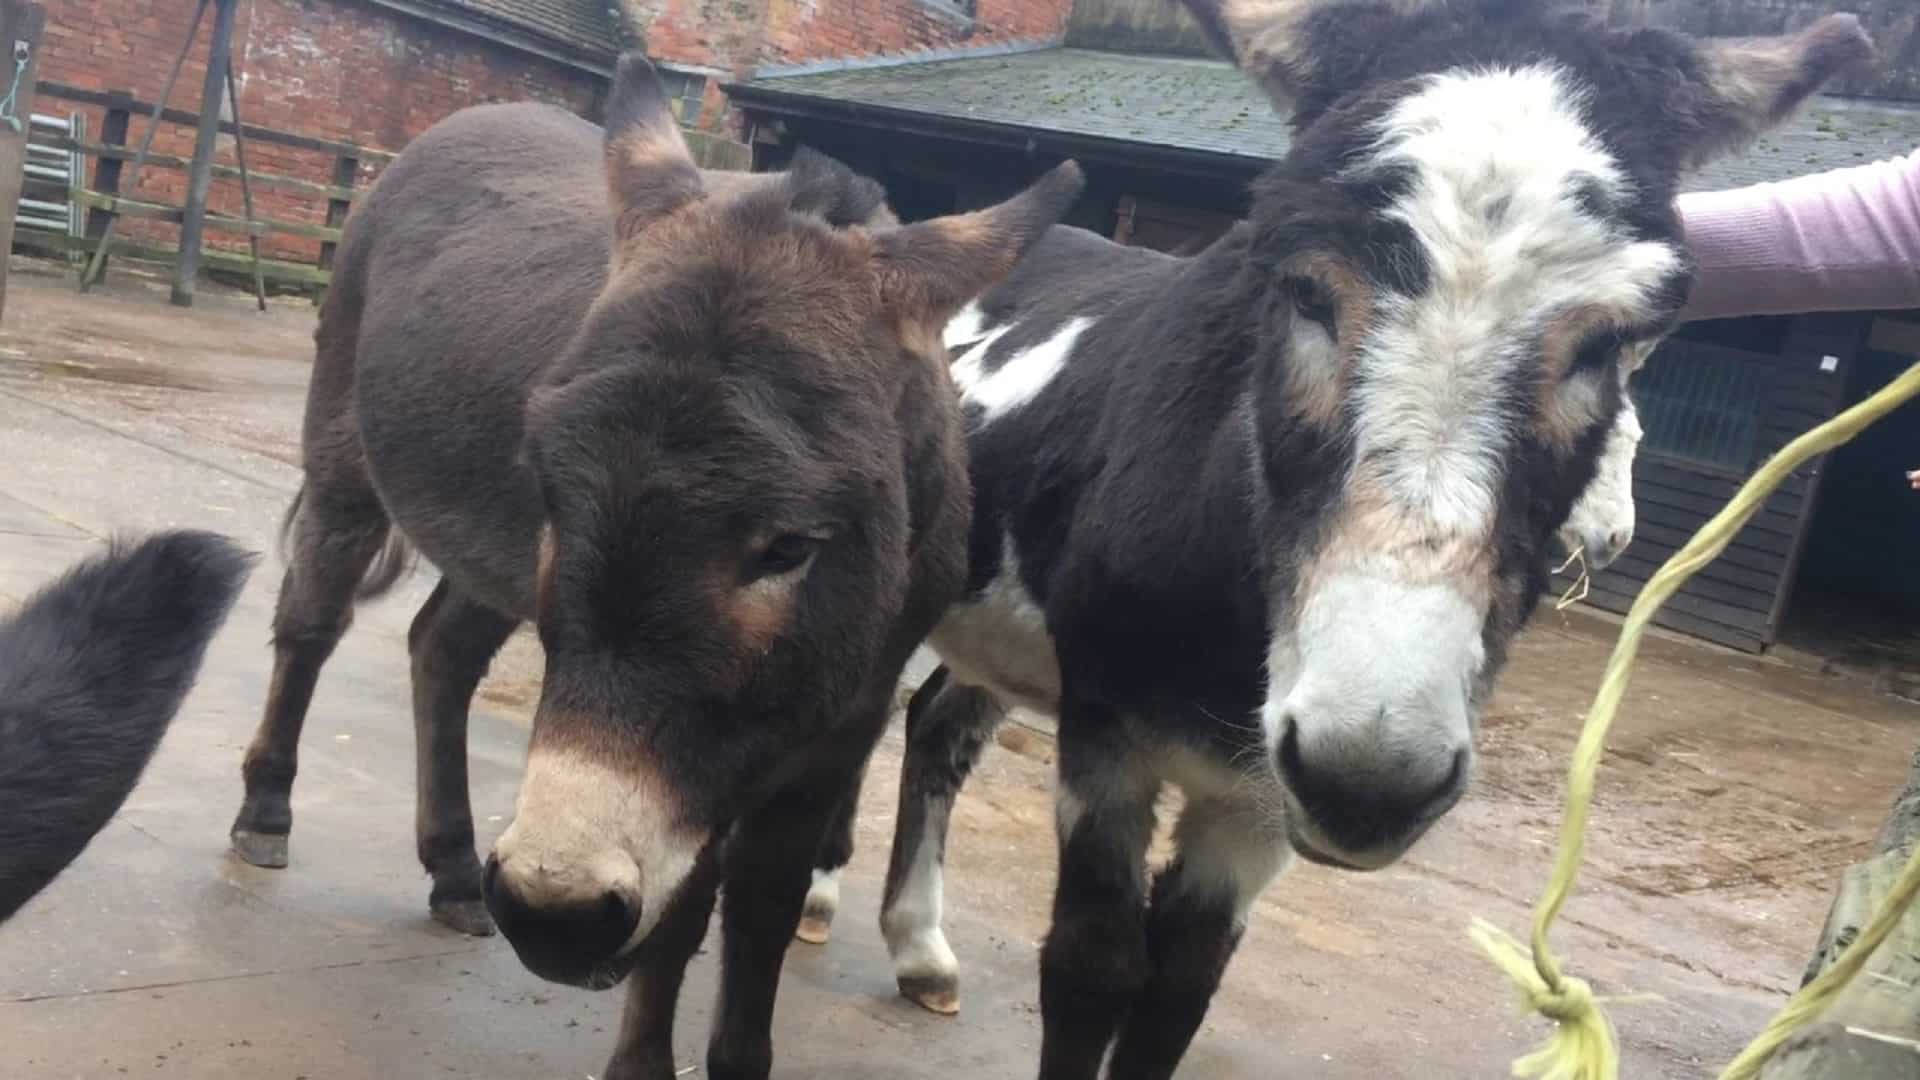 can you visit birmingham donkey sanctuary